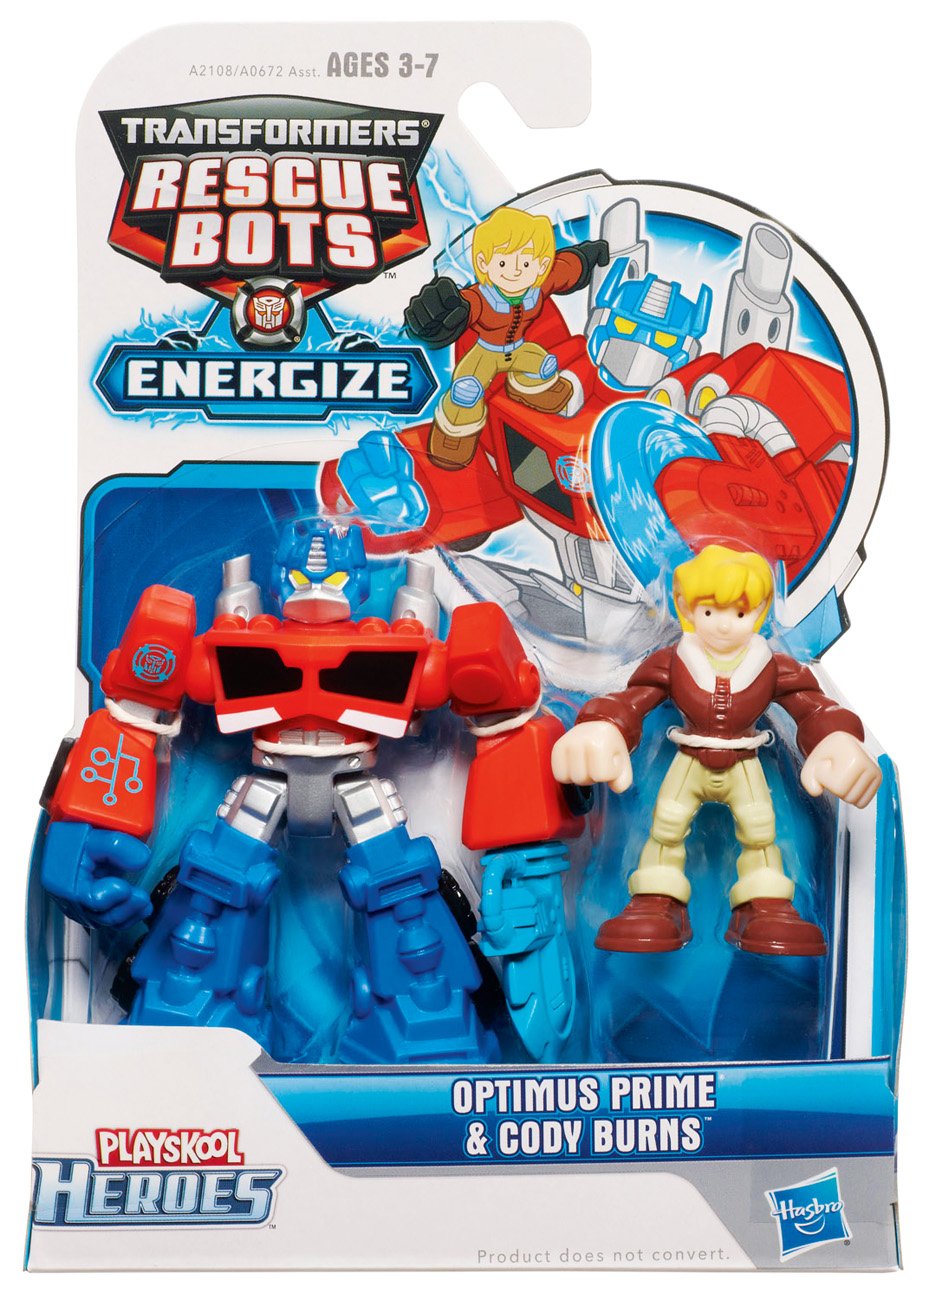 Playskool Heroes Transformers Rescue Bots Cody Burns Figure 